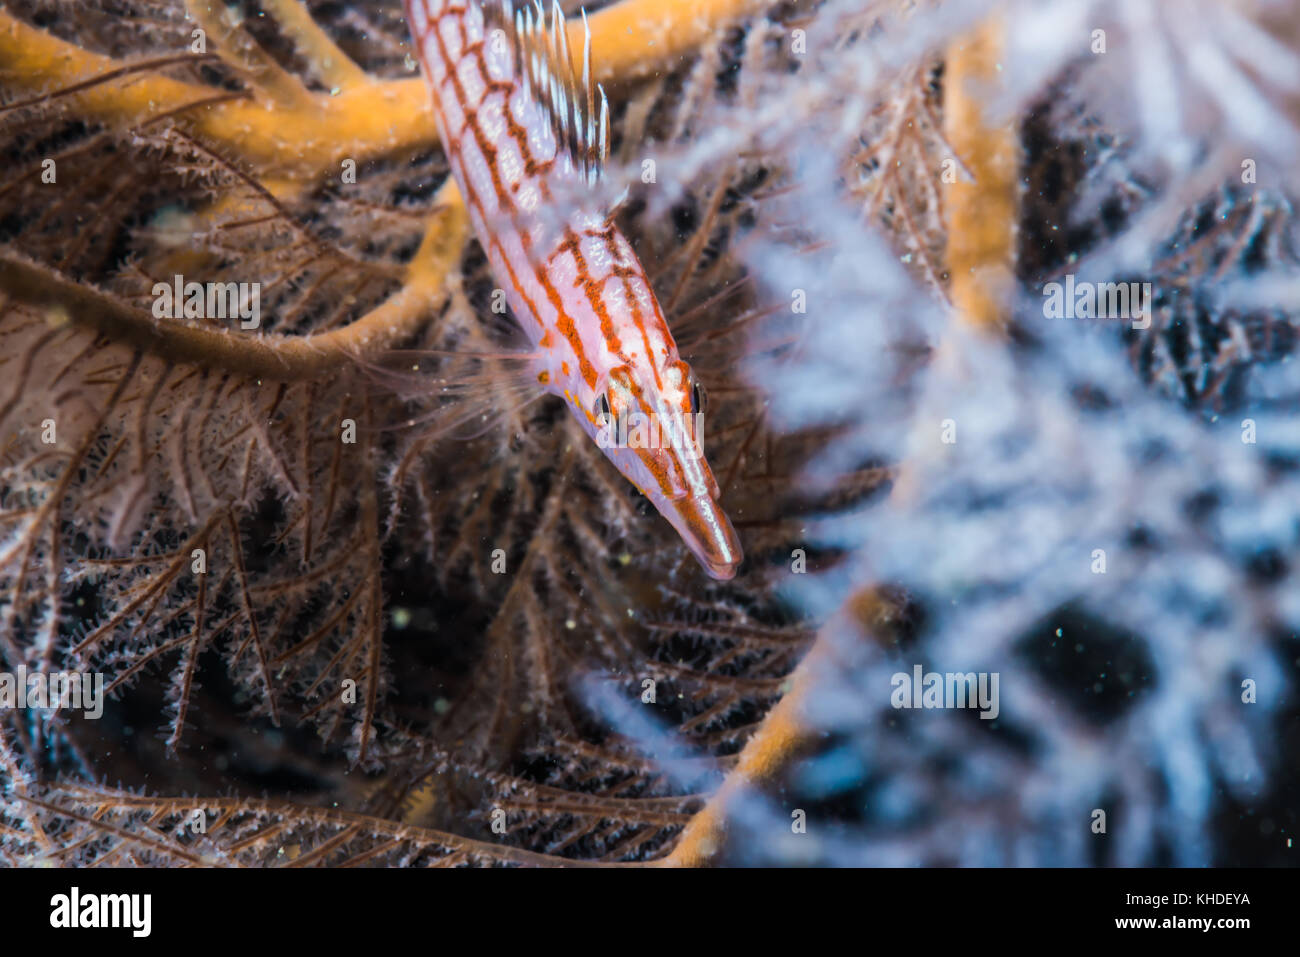 Longnose hawkfish, Oxycirrhites typus  Bleeker, 1857 on the blanch of black corals. Owase, Mie, Japan. Depth 15m Stock Photo